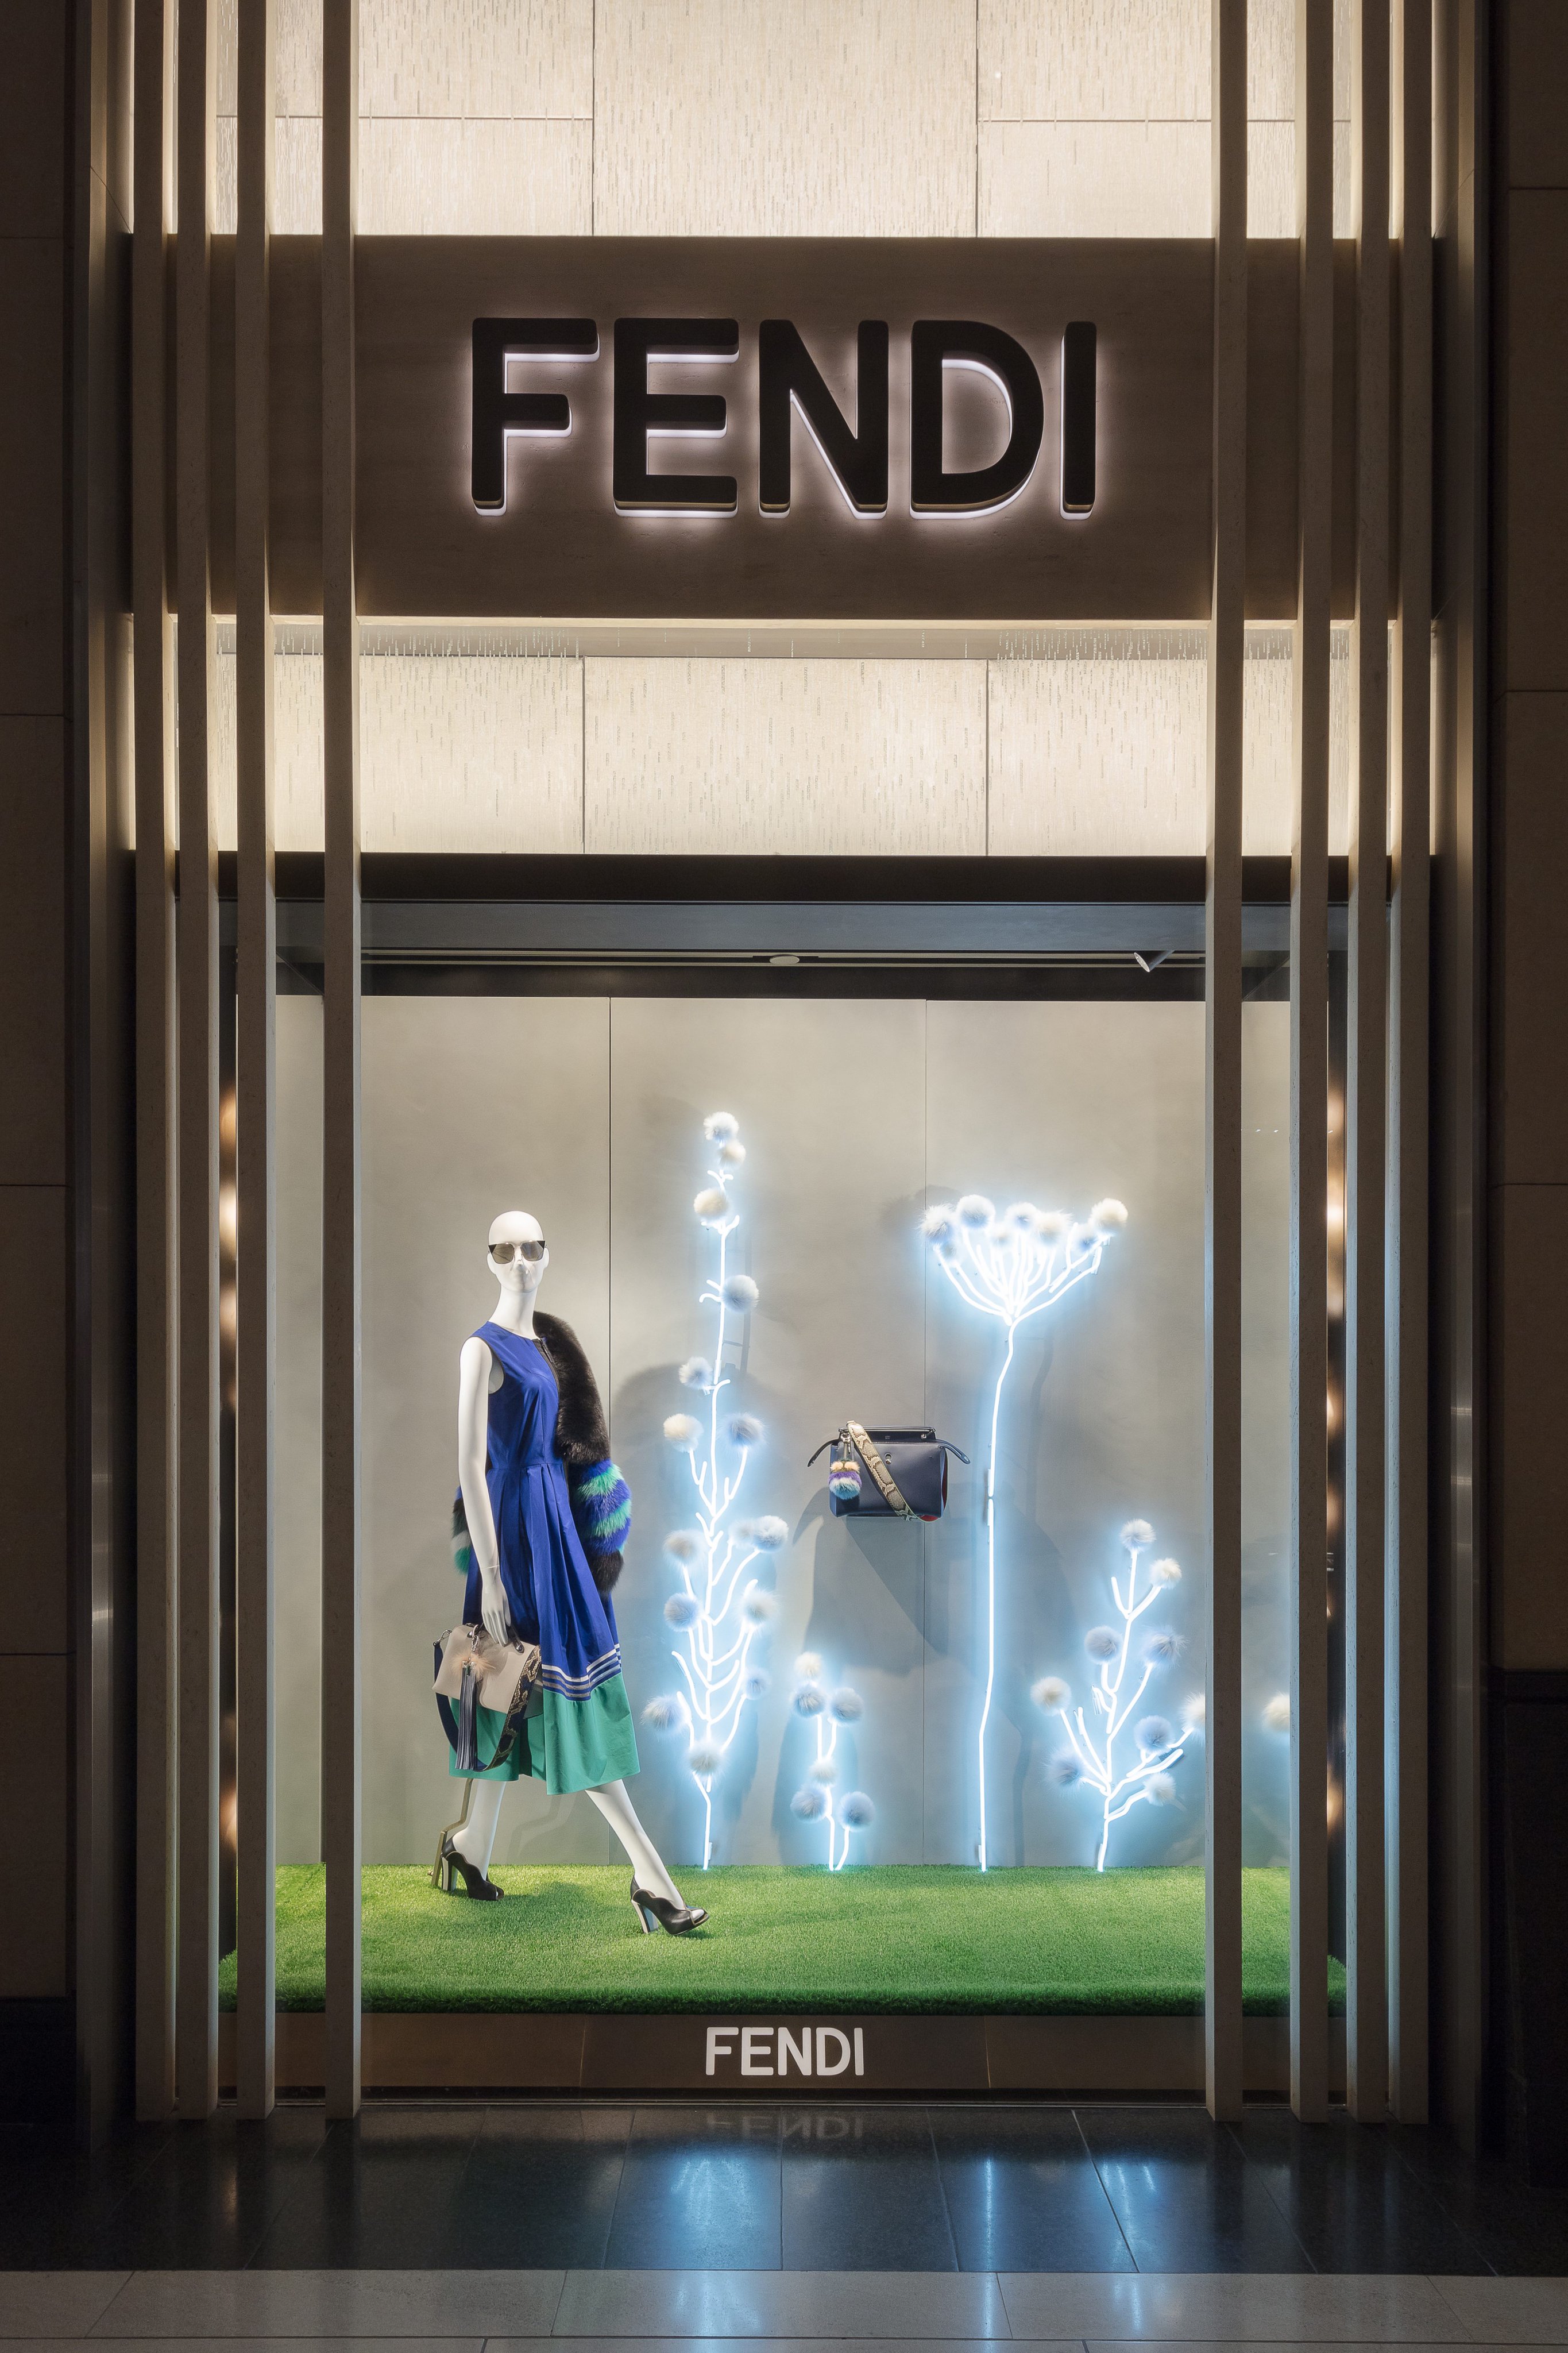 Fendi on X: Fendi boutique windows are illuminated by the